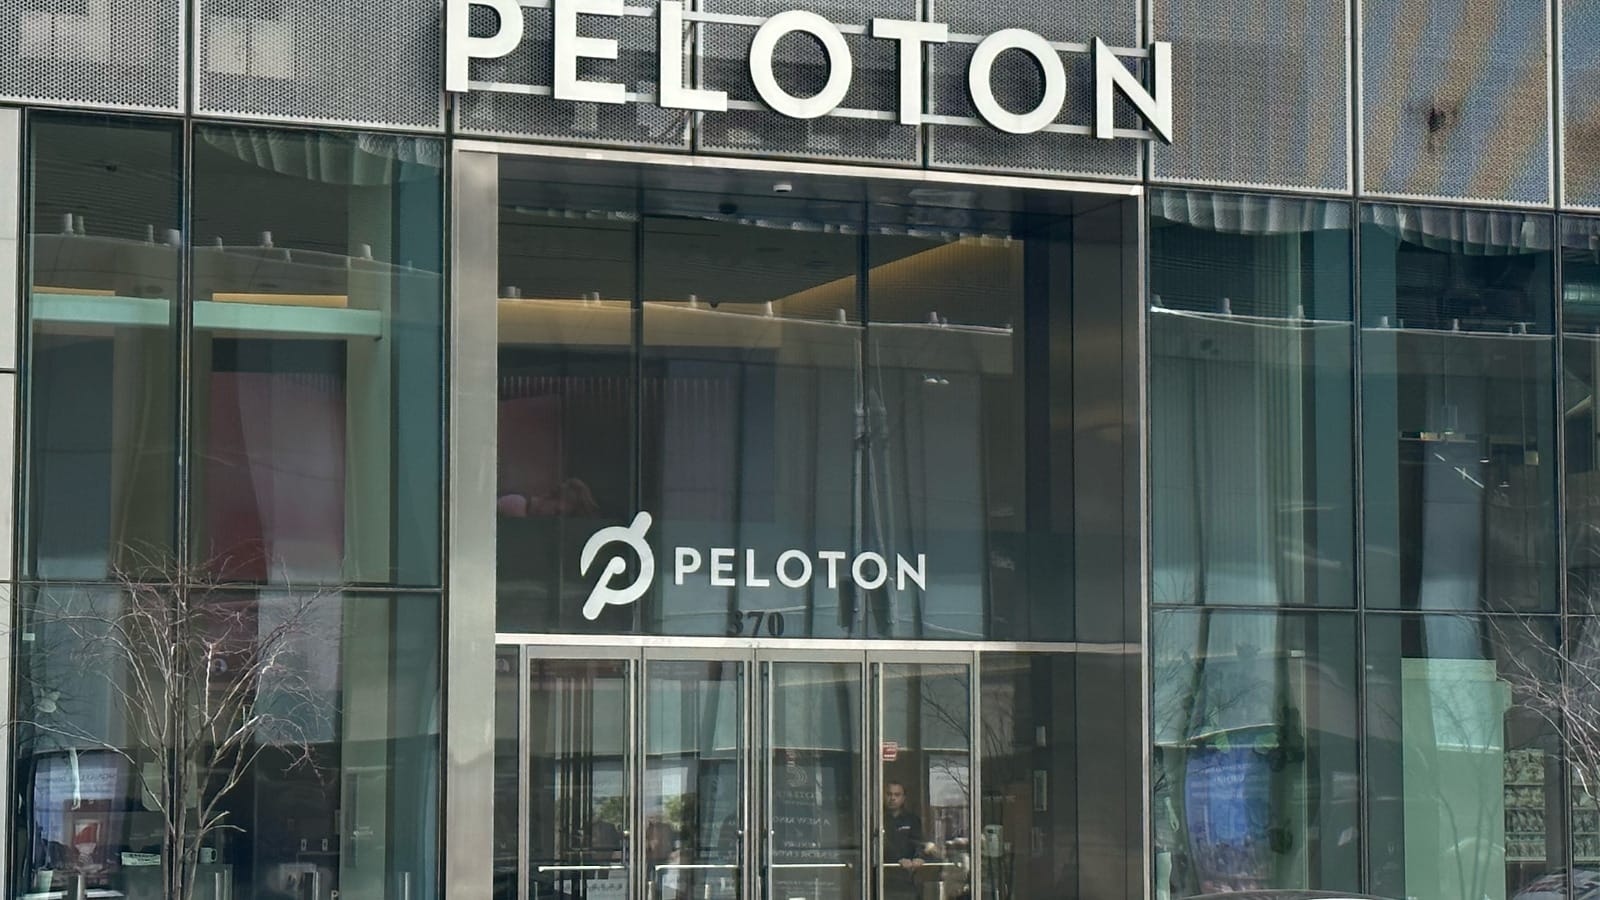 Peloton Studios in New York